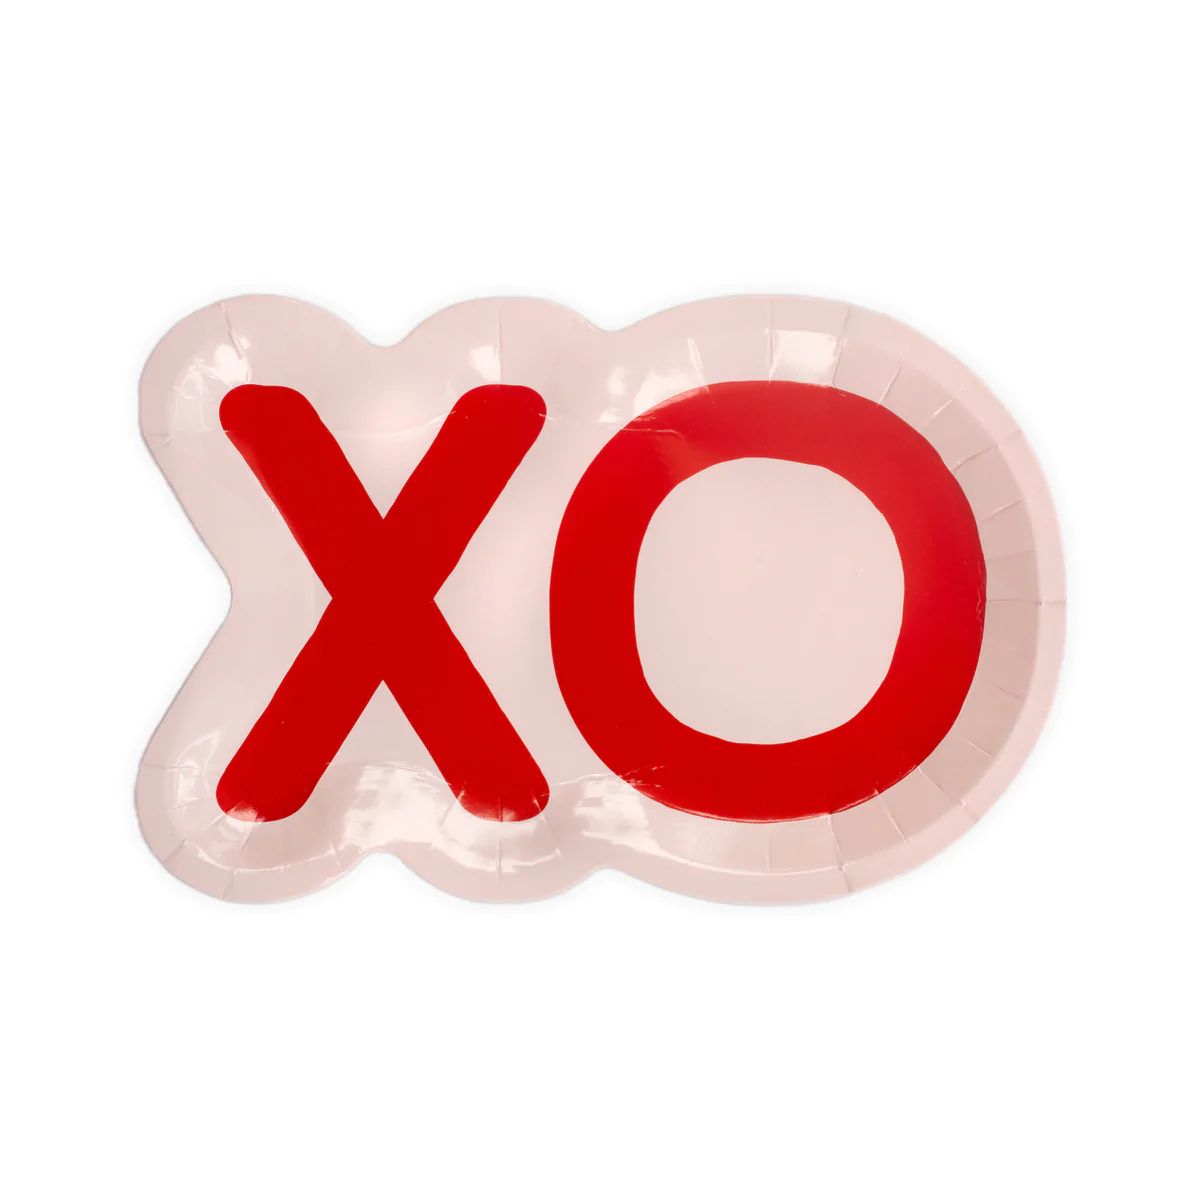 XO Shaped Paper Plates | My Mind's Eye